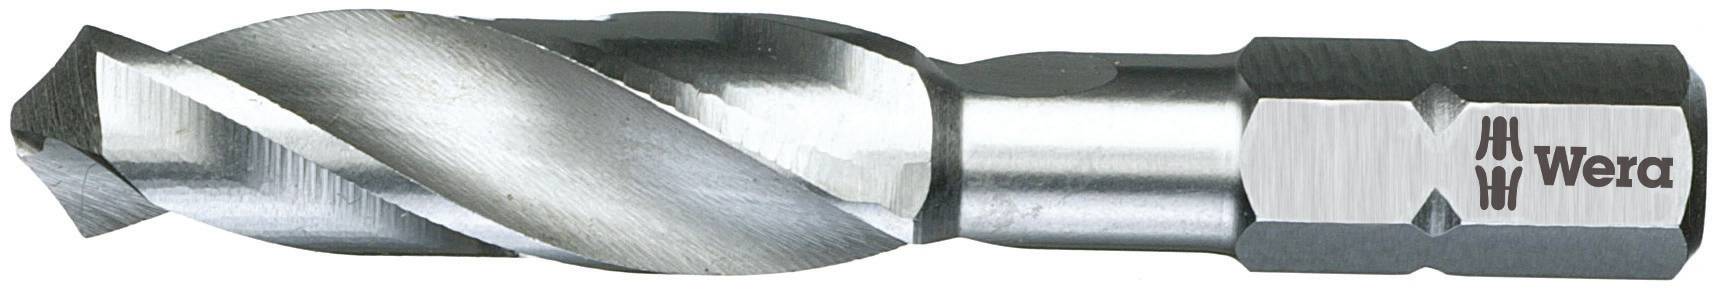 WERA HSS Metall-Spiralbohrer 6 mm 05104618001 Gesamtlänge 50 mm 1/4\" (6.3 mm) 1 St. (05104618001)